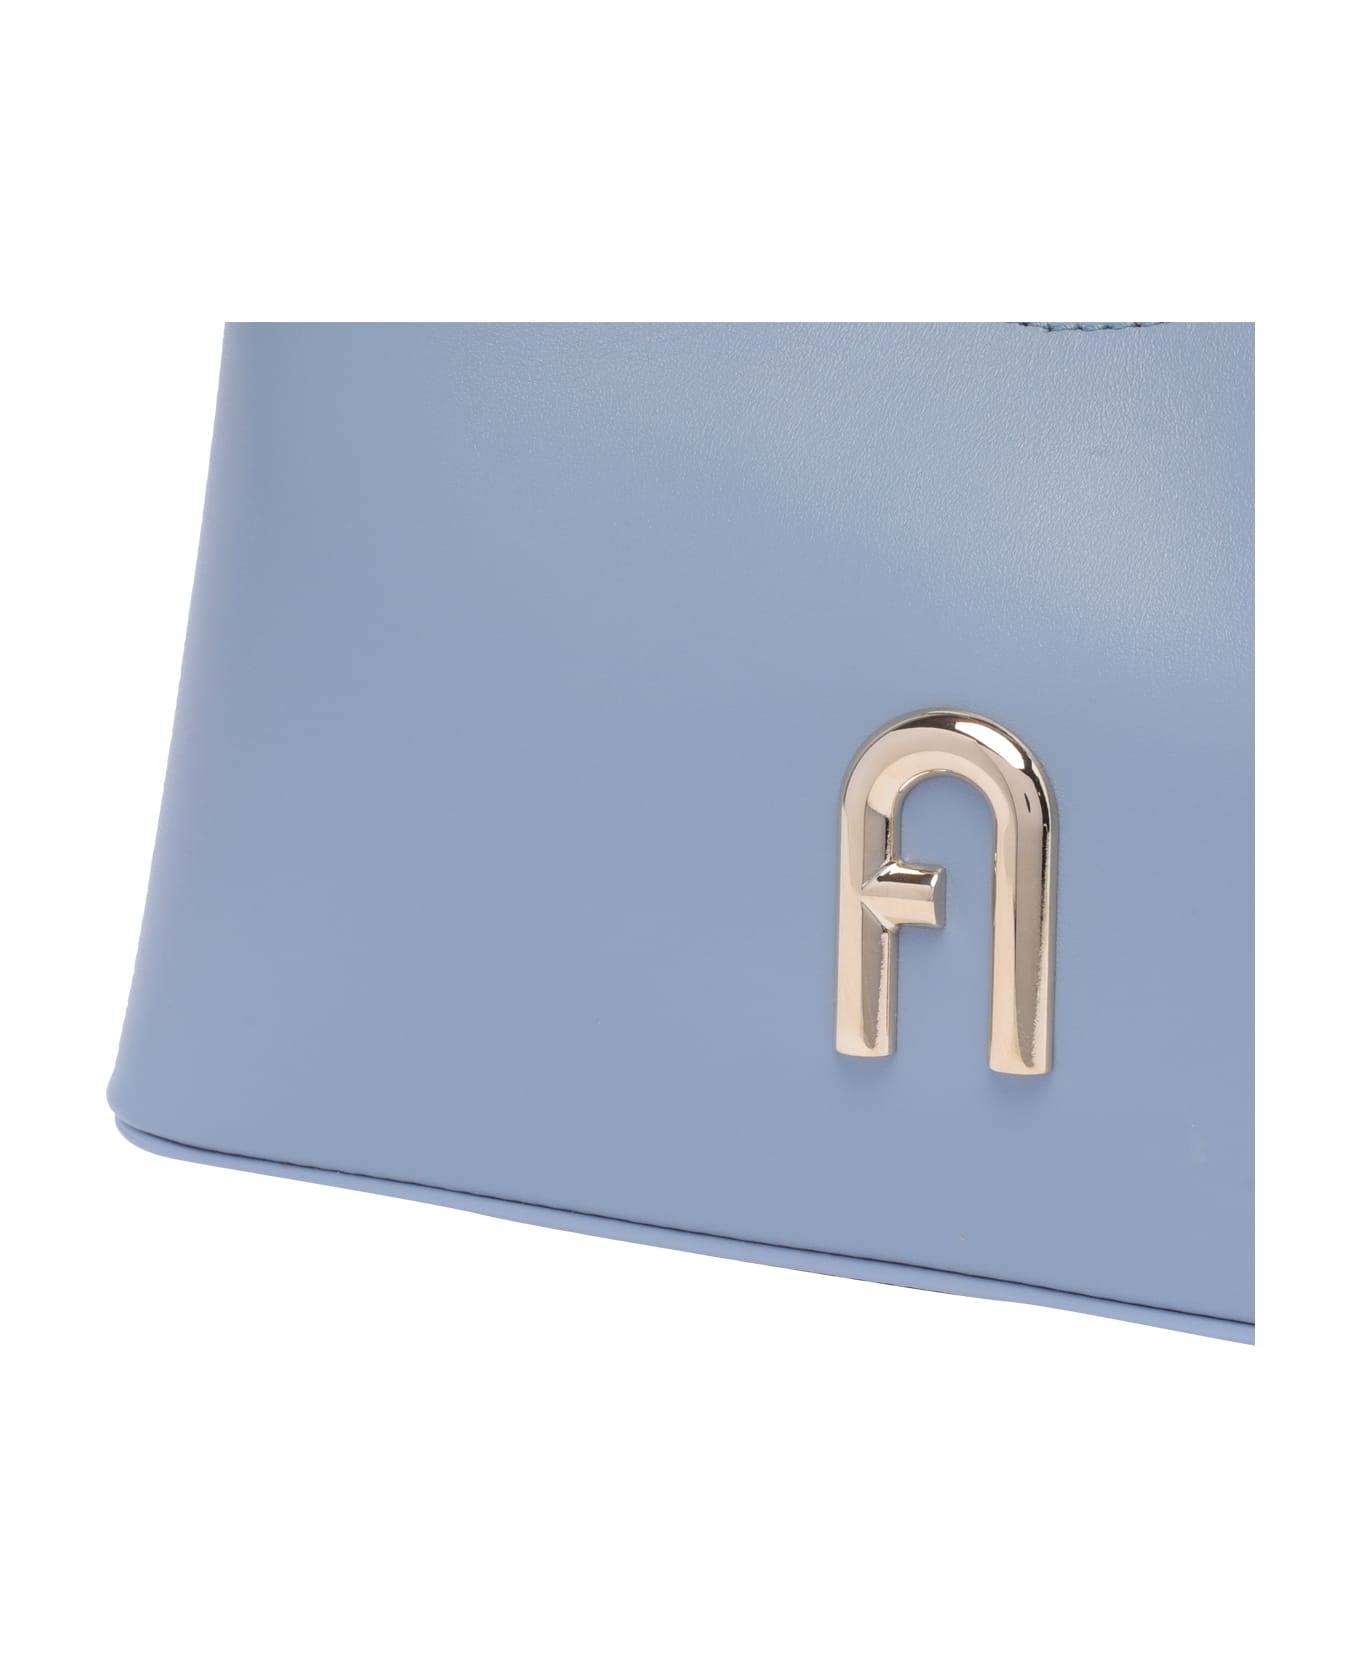 Furla Diamante Mini Bag - Blue トートバッグ